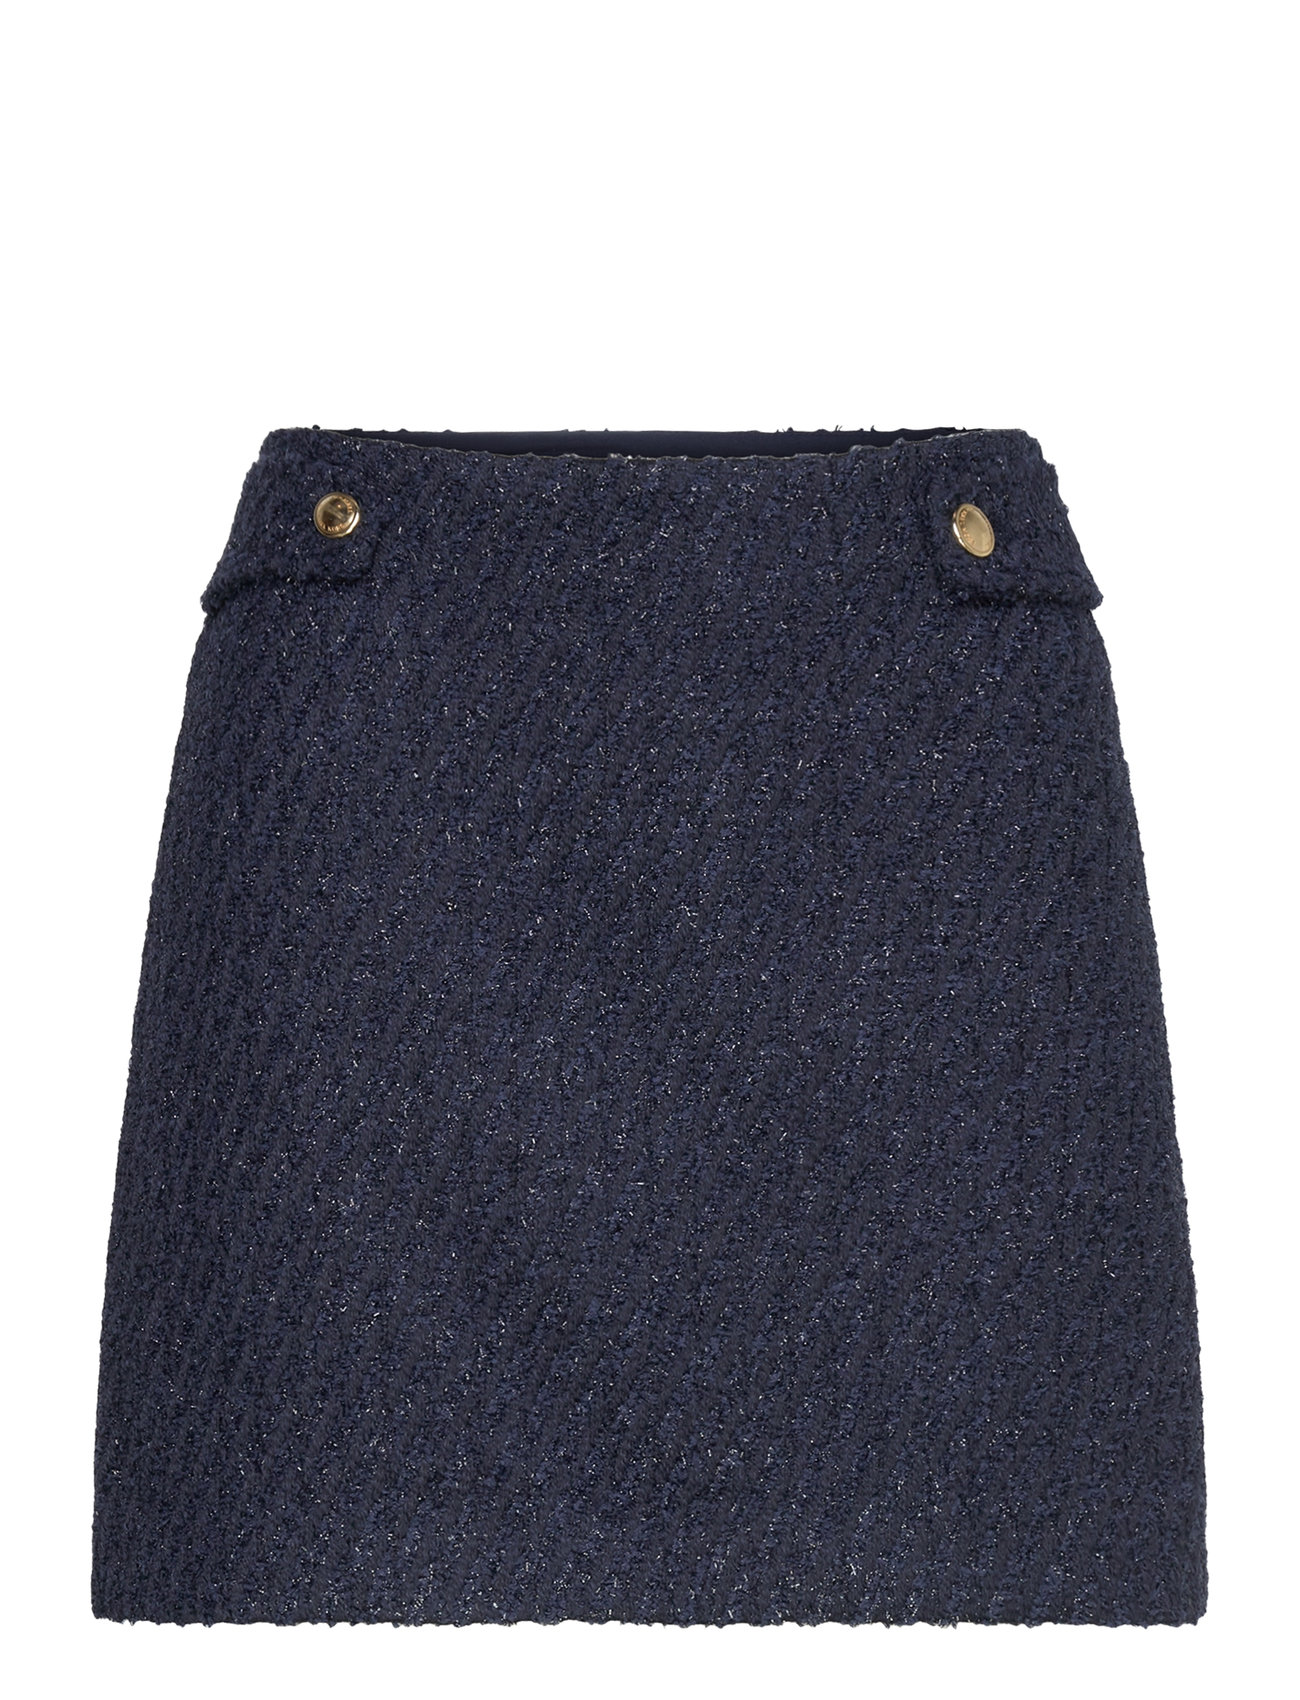 Tweed Mini Skirt Kort Kjol Navy Michael Kors